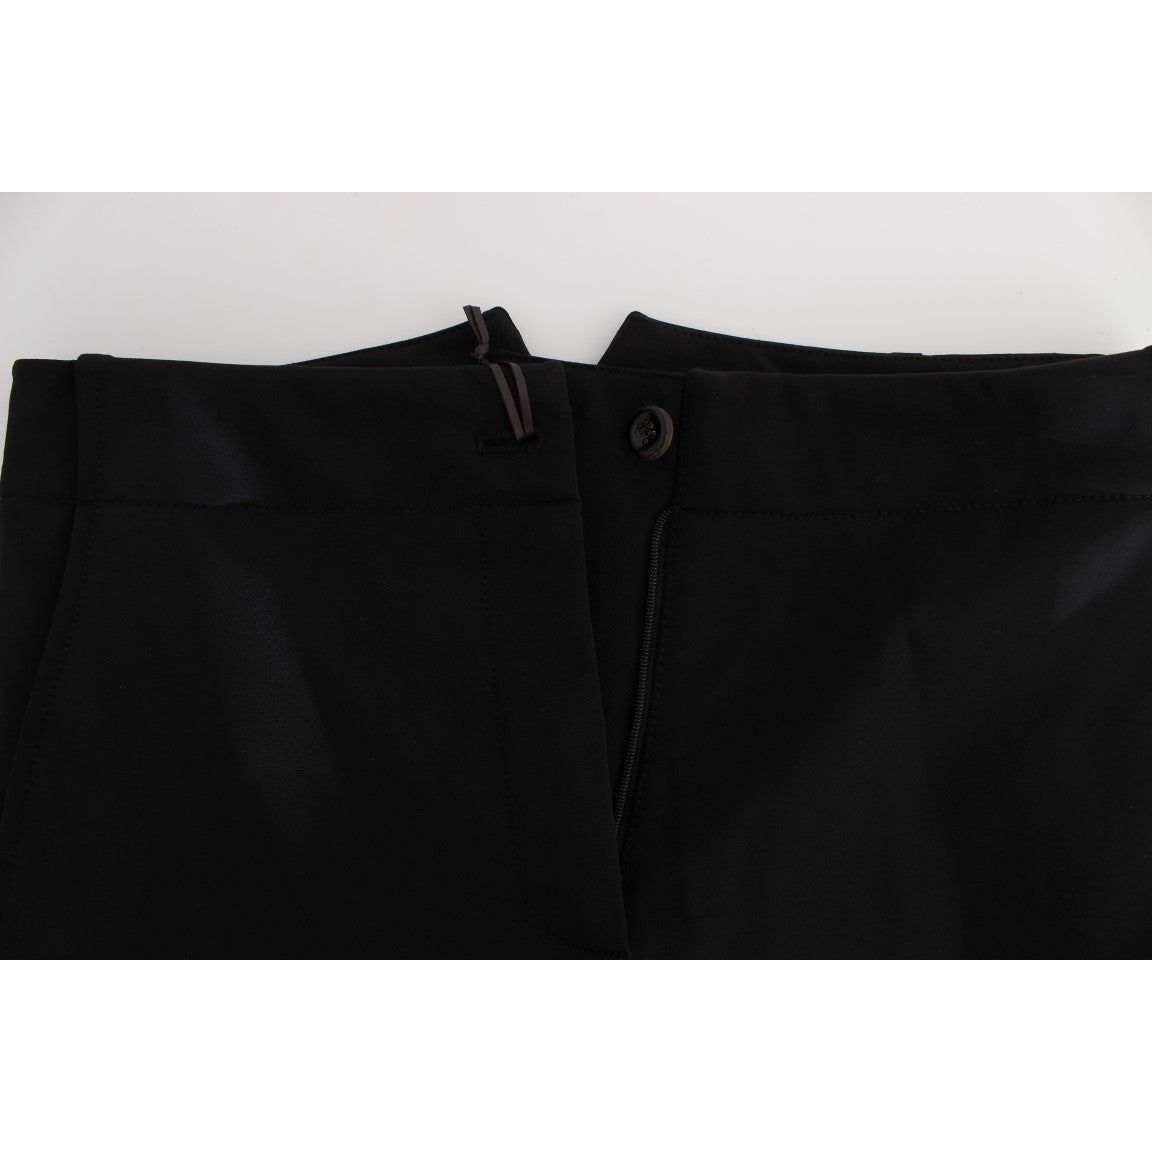 Ermanno Scervino Elegant Cropped Capri Pants in Black Jeans & Pants black-cotton-blend-capri-cropped-pants